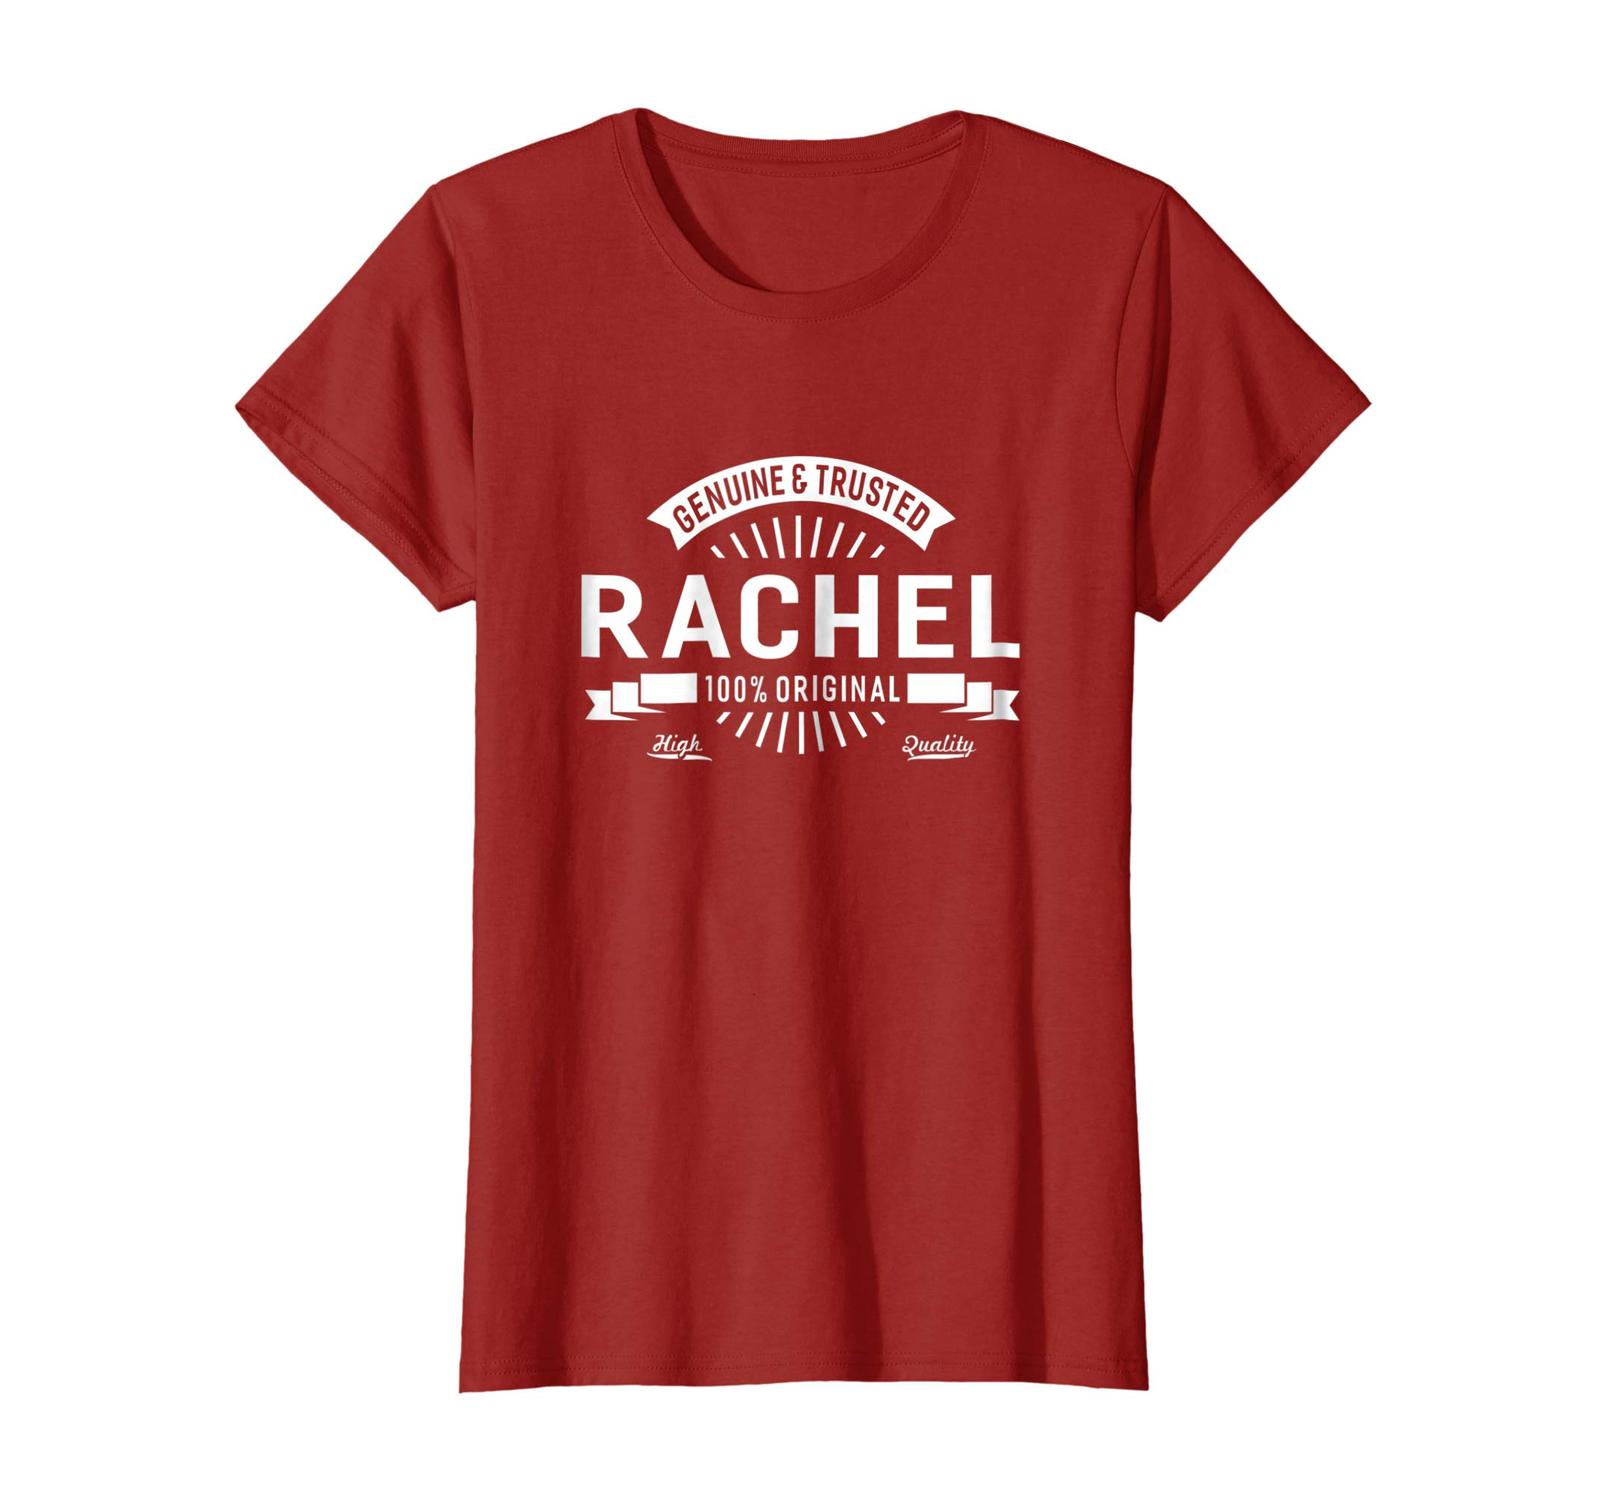 Dog Fashion - Rachel Genuine Original First Name T-shirt Great Gift Idea Wowen